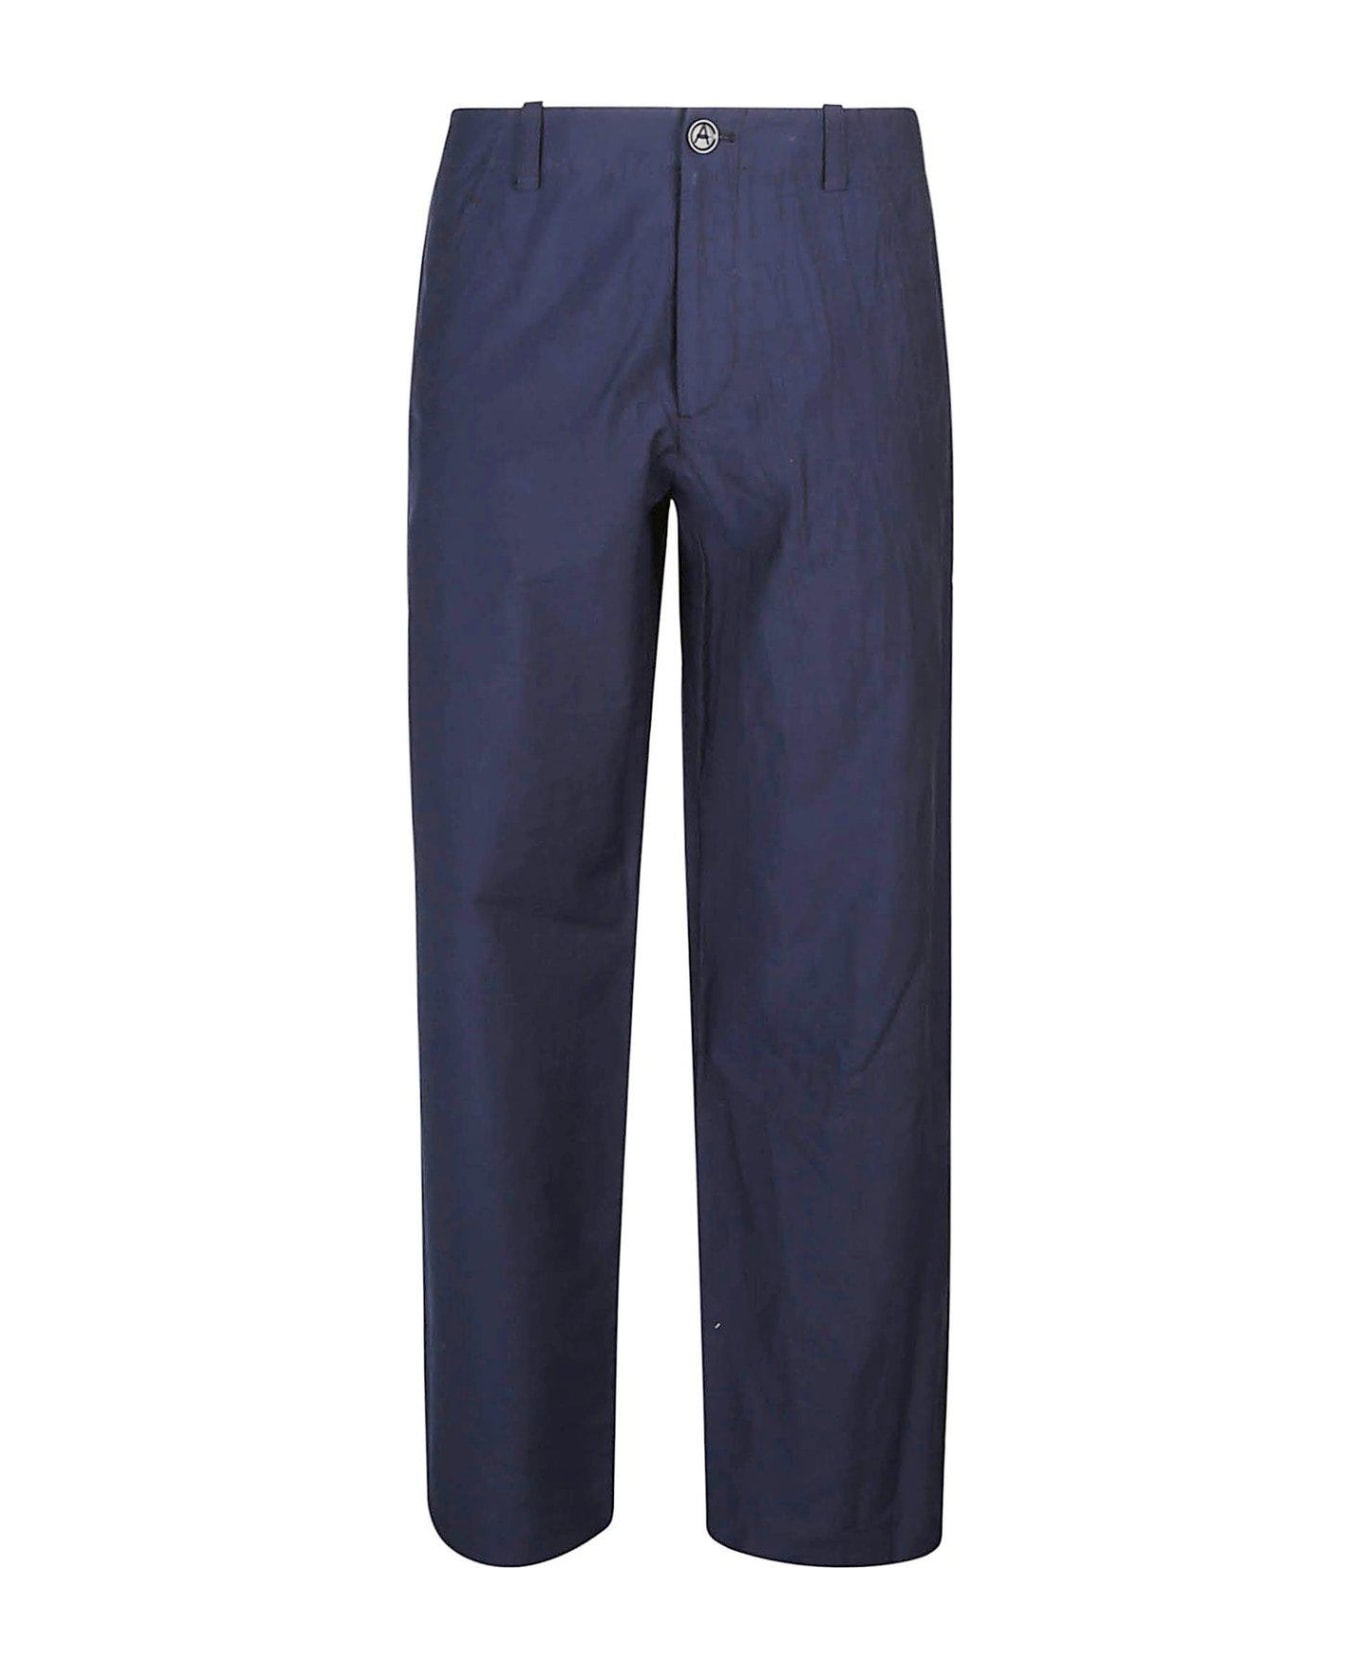 A.P.C. Mathurin Straight-leg Tailored Trousers - Blue